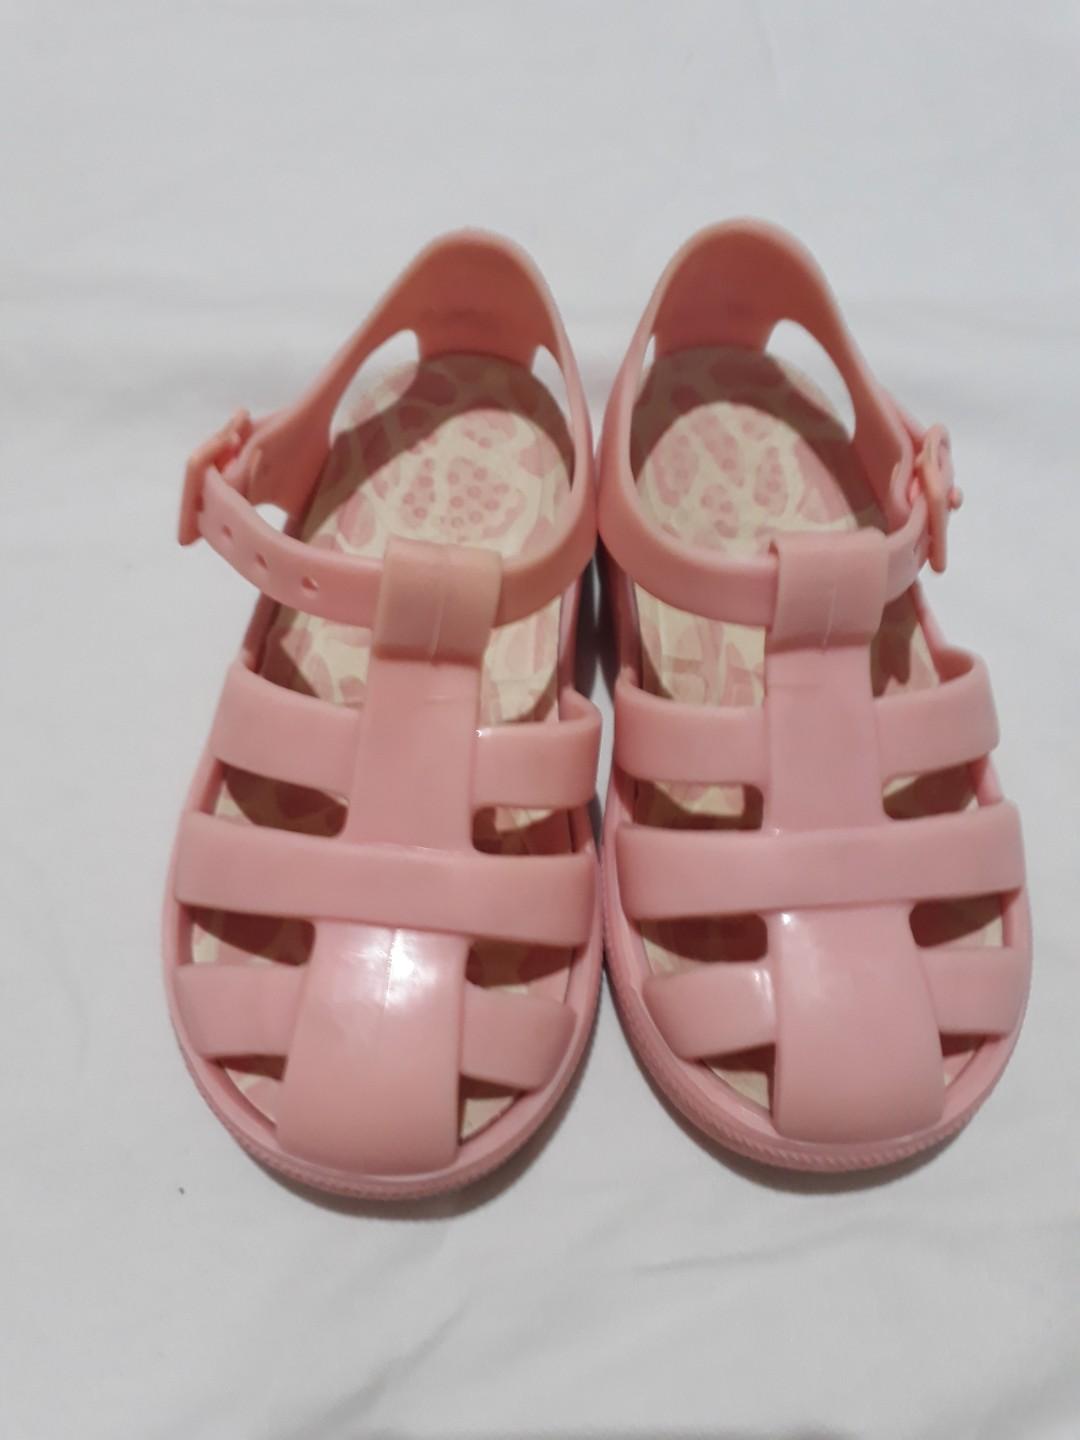 zara jelly shoes